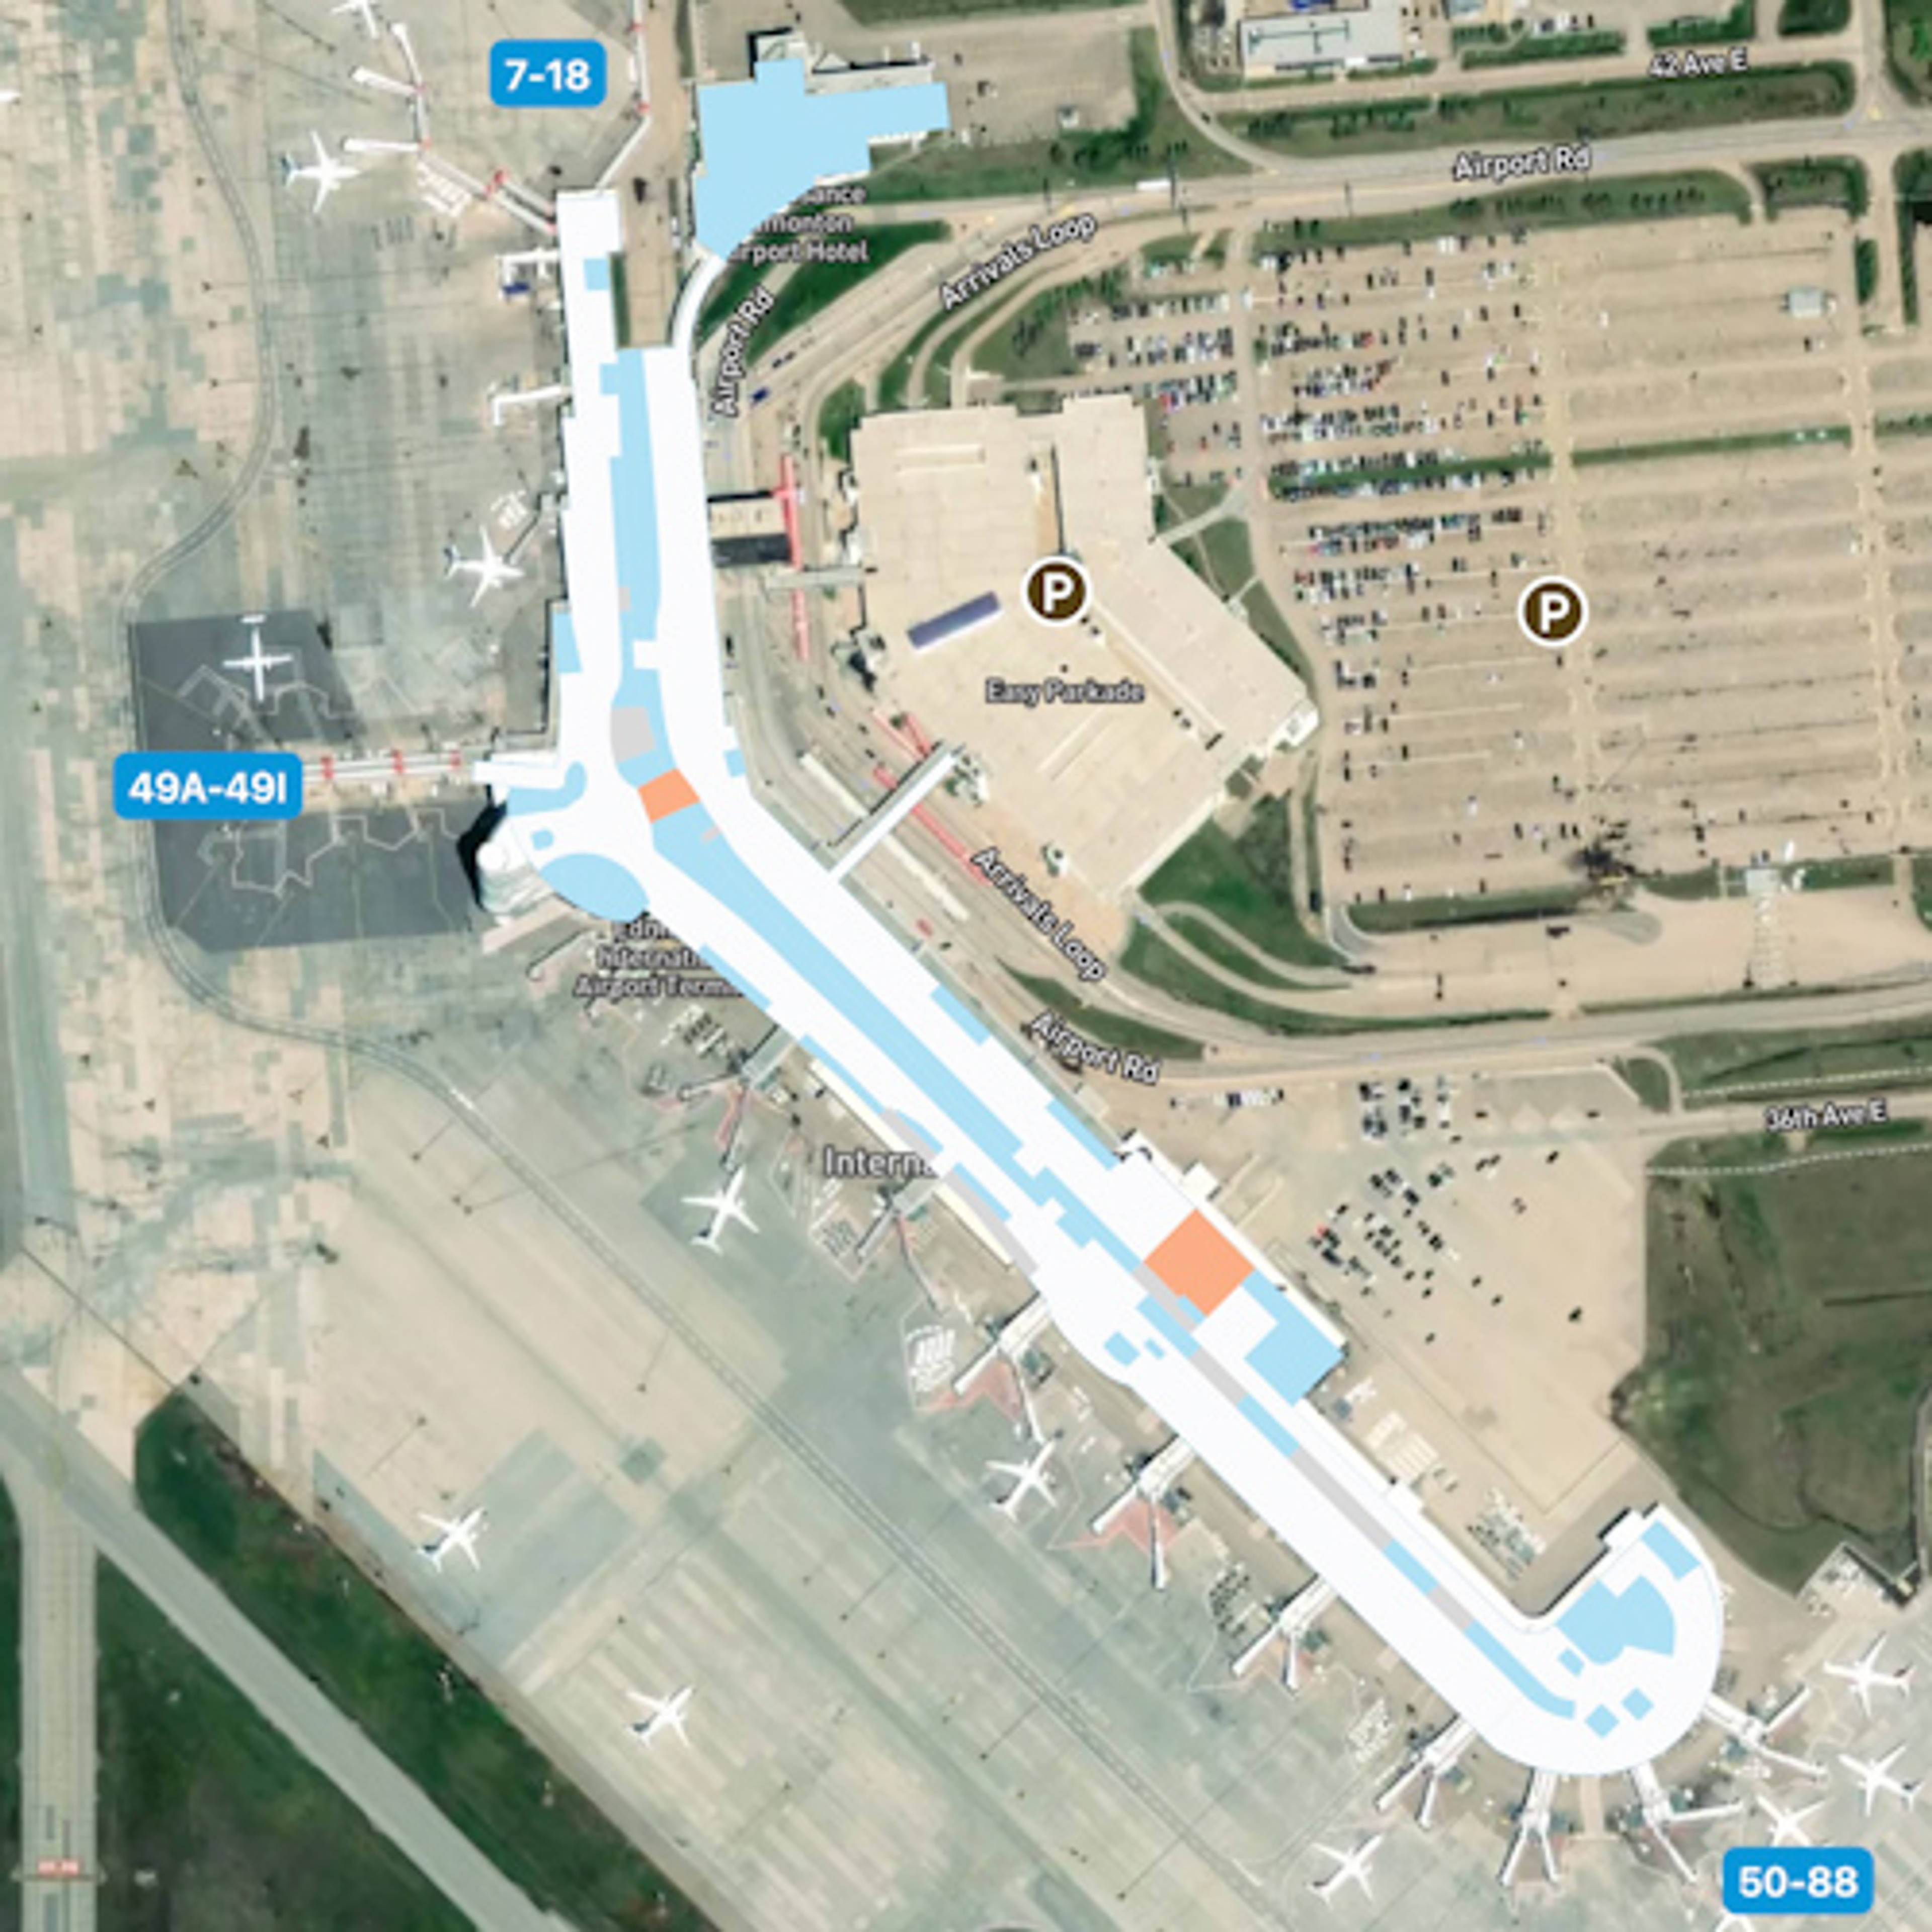 Edmonton Airport Overview Map